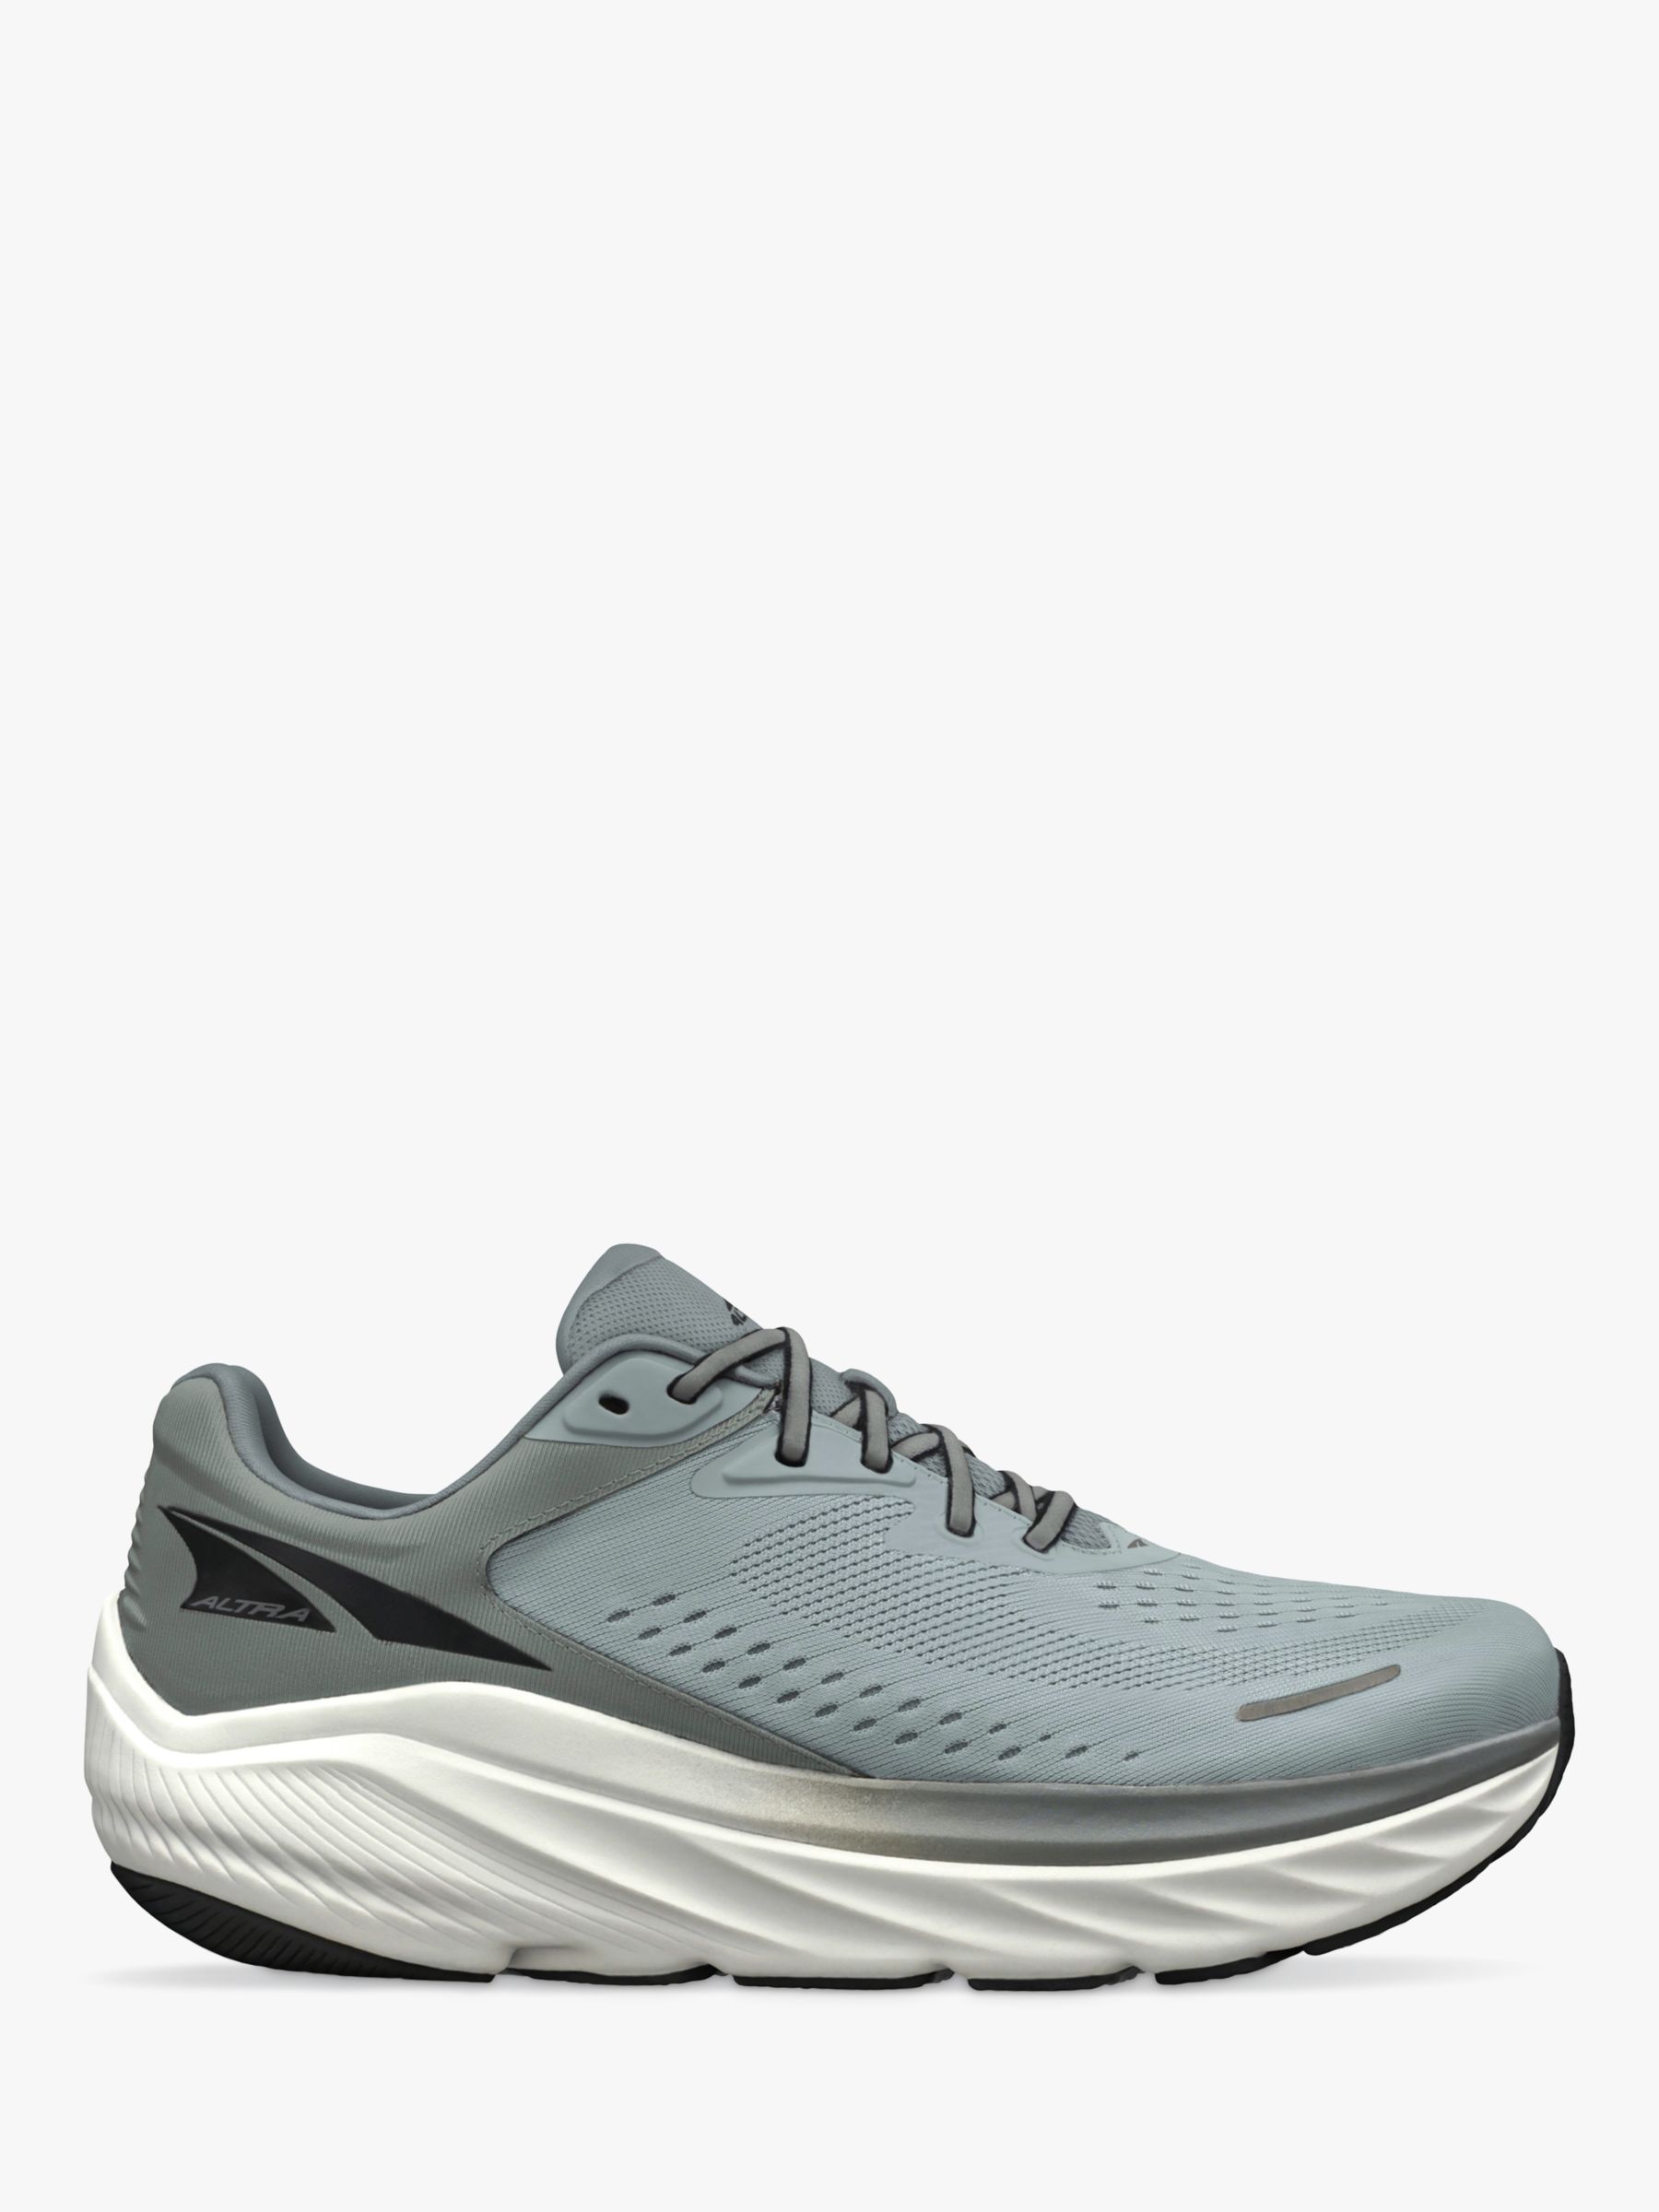 Altra VIA Olympus 2 Men's Running Shoes, Gray, 11